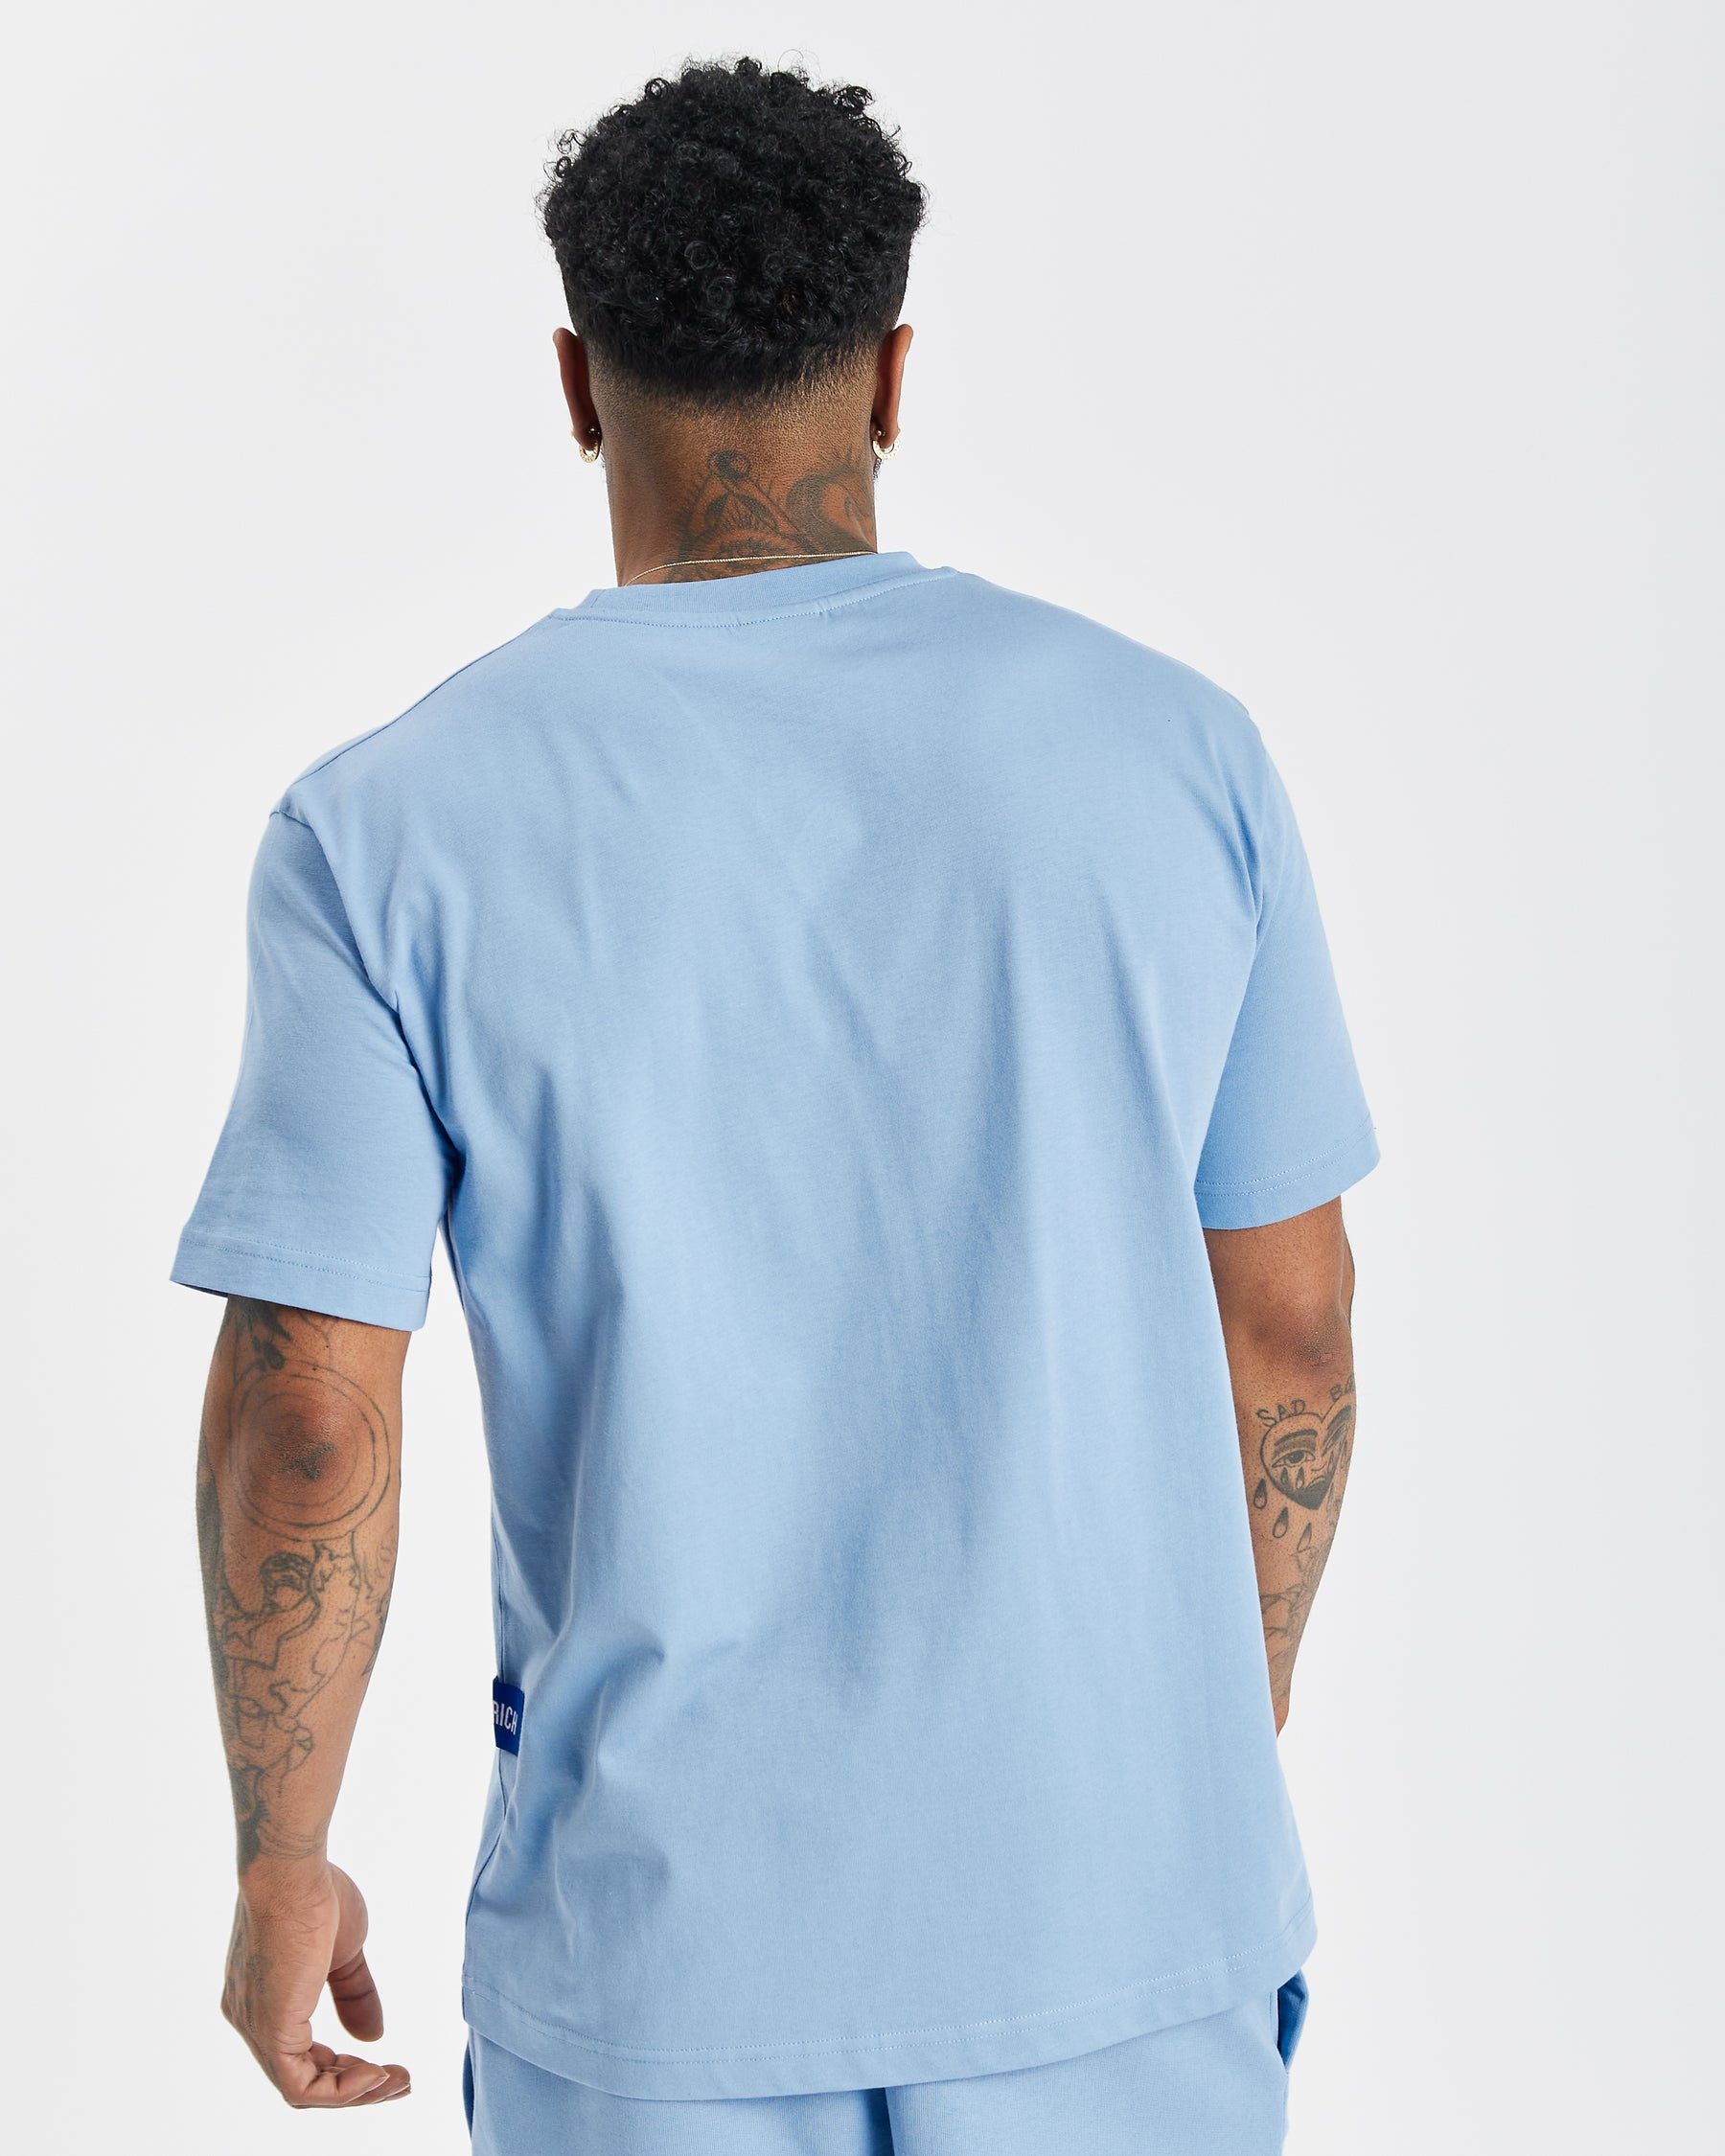 OG Pacific V2 T-shirt - Placid Blue/White/déjà vu Blue